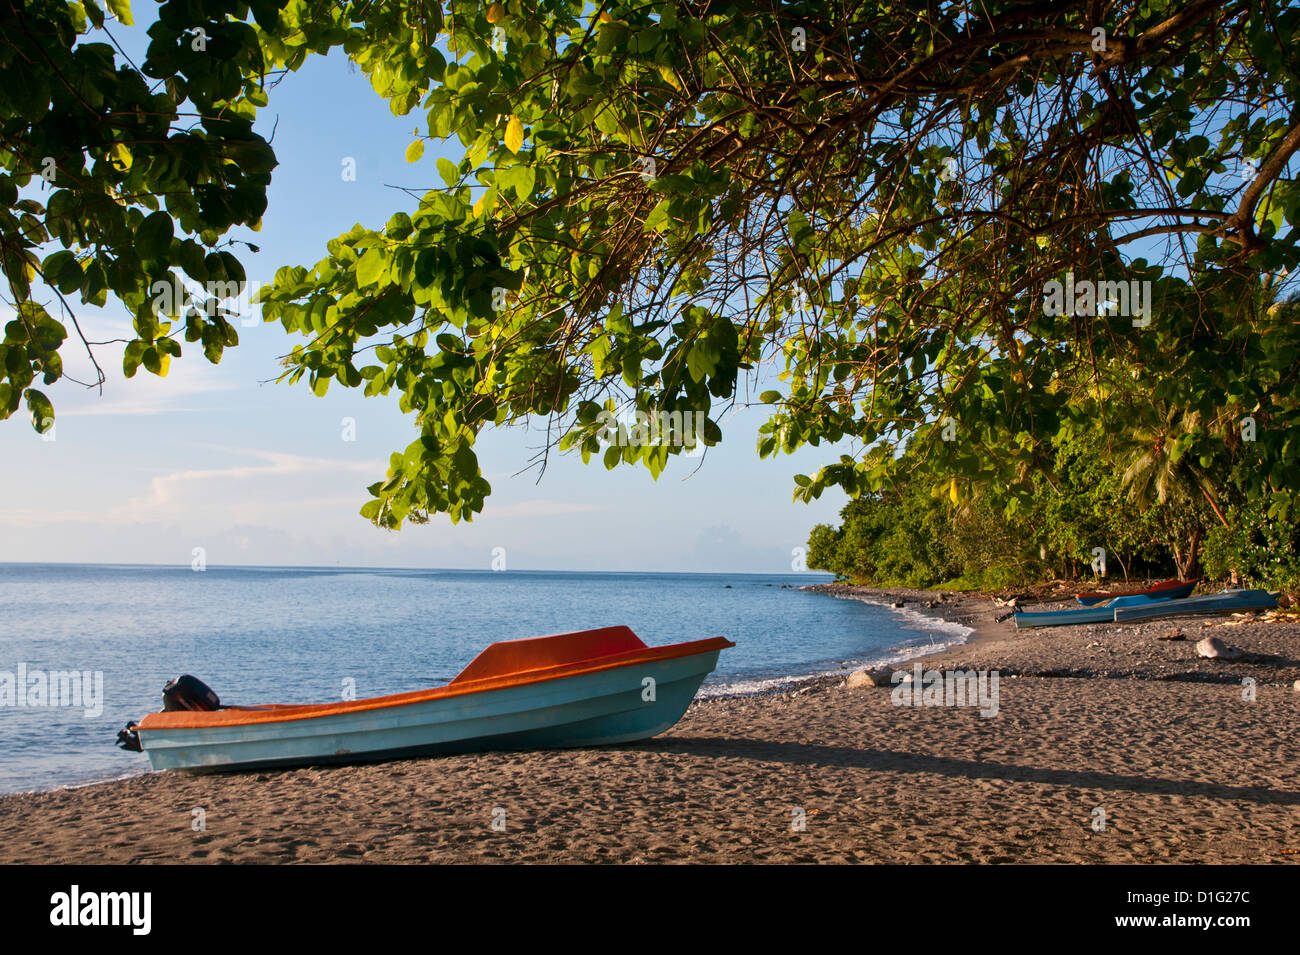 Beach on Savo Island, Solomon Islands, Pacific Stock Photo